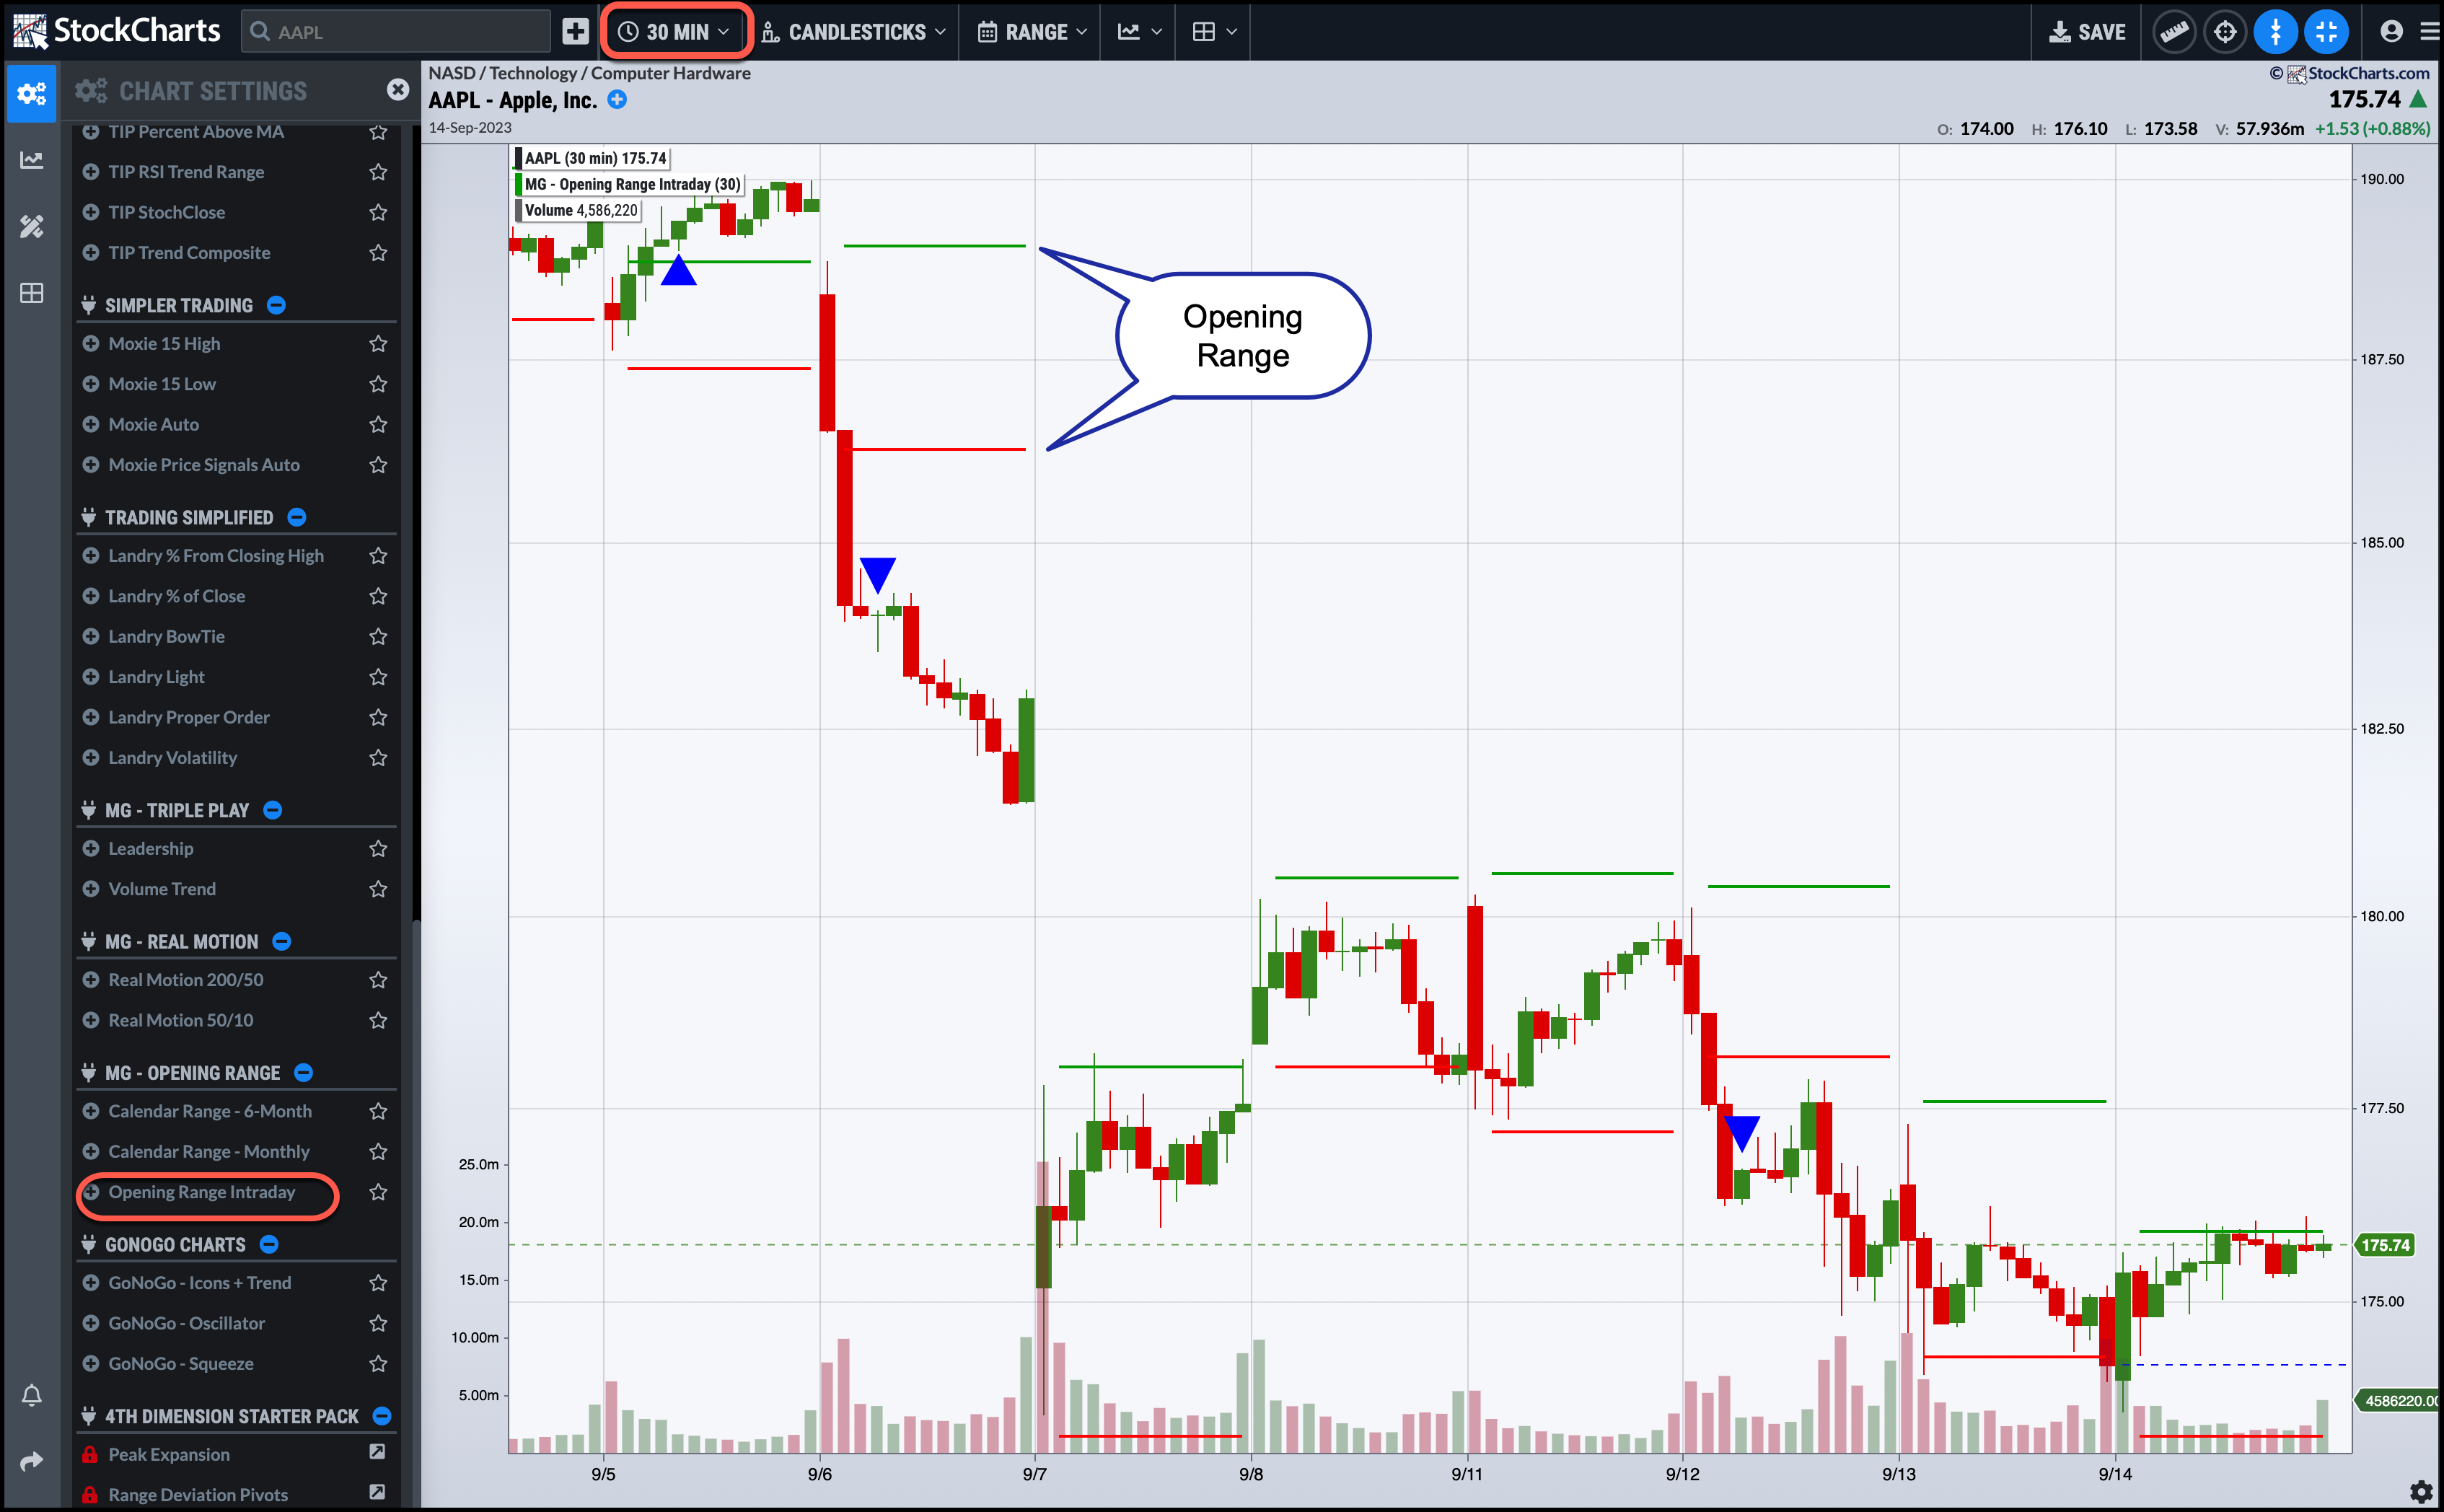 MarketGauge Opening Range Intraday chart in StockChartsACP